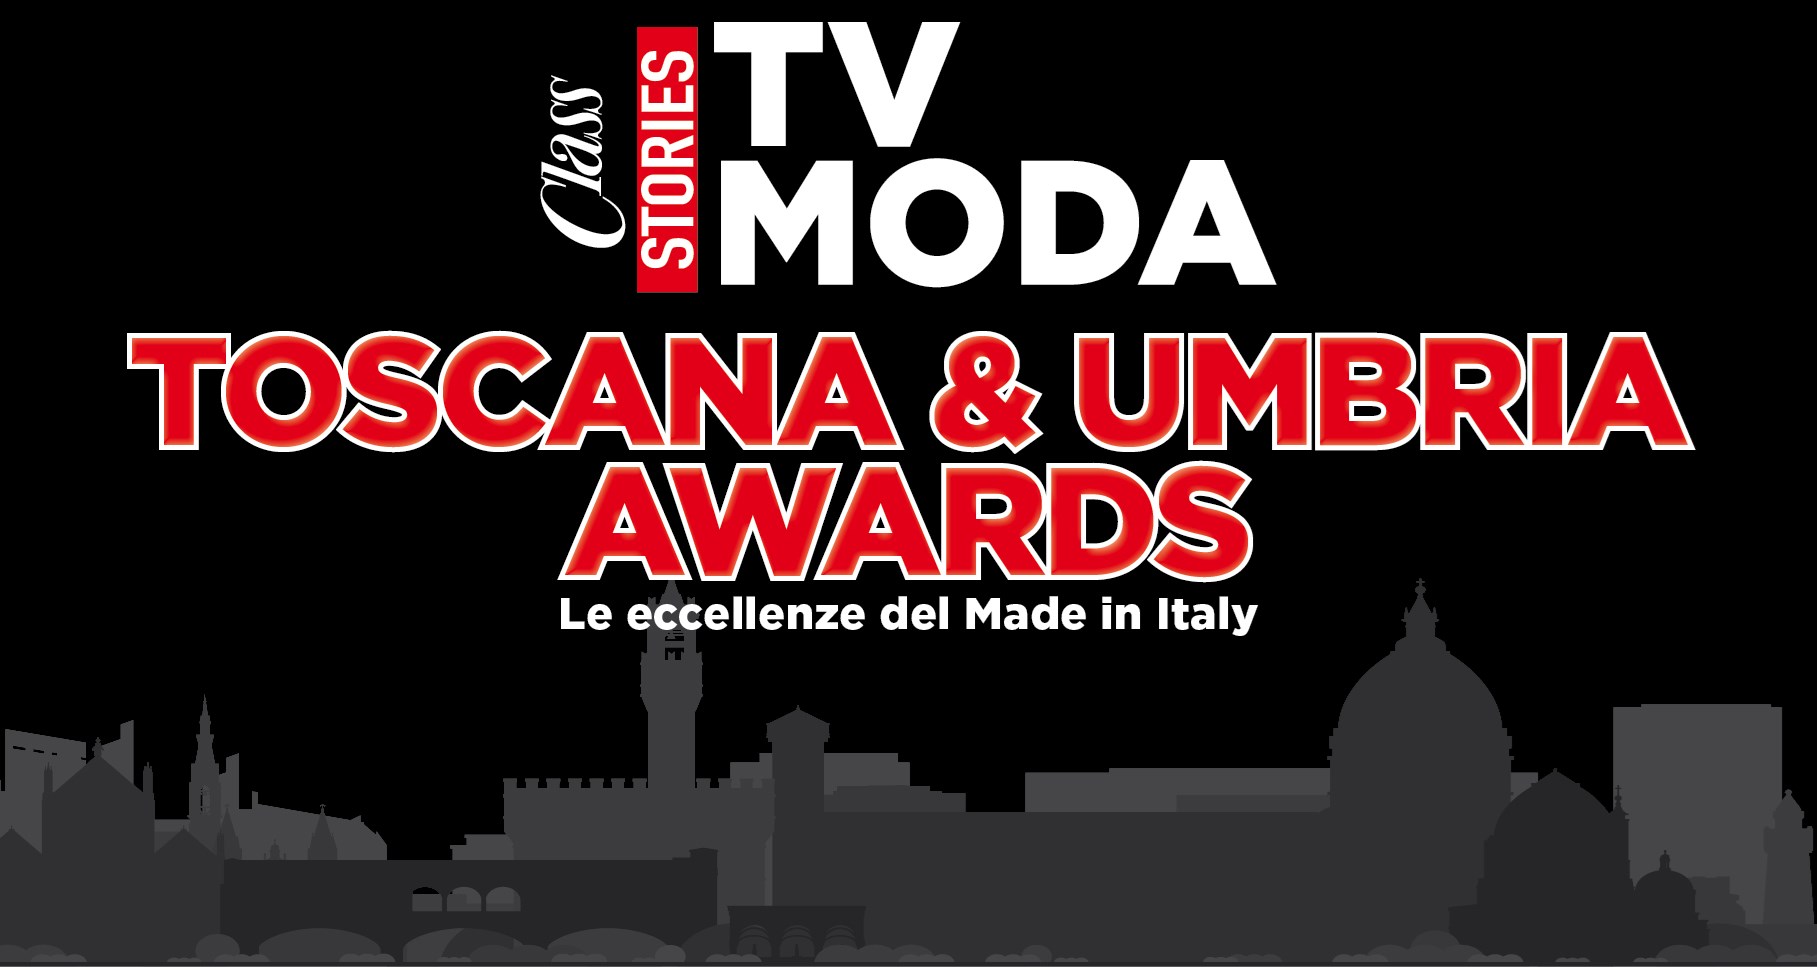 Class TV Moda Toscana & Umbria : Le eccellenze del Made in Italy 